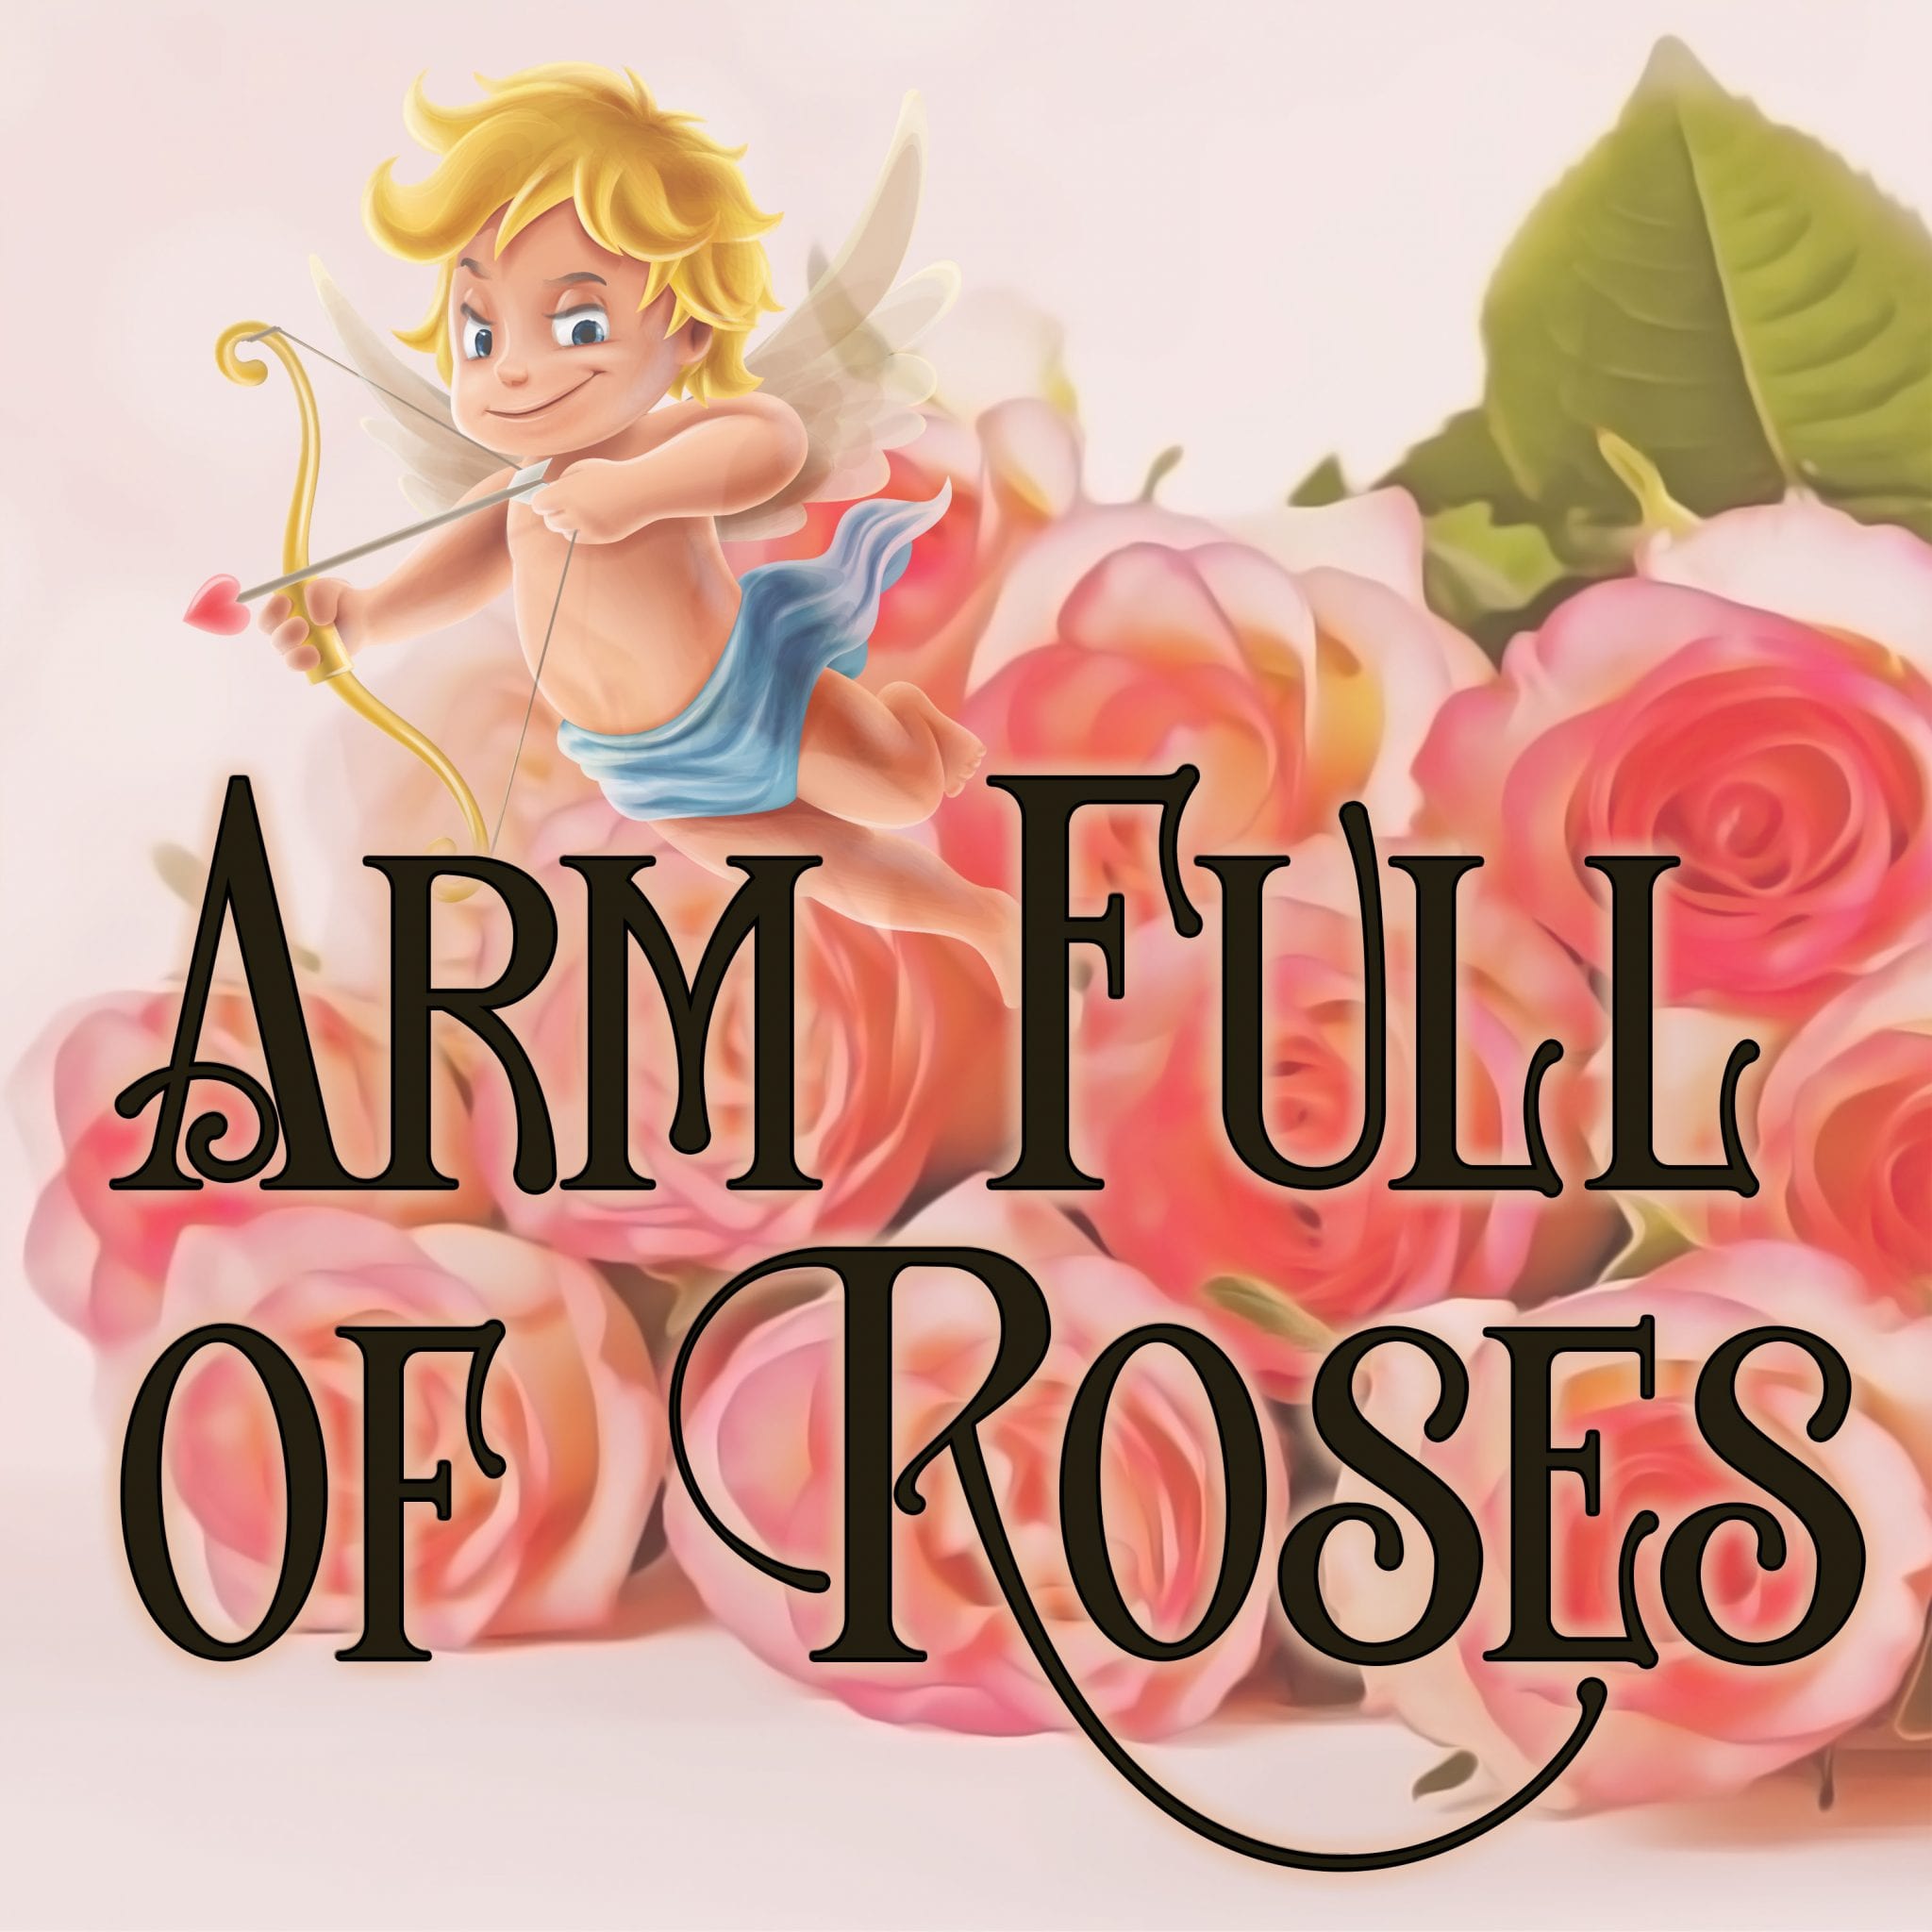 Arm-Full-of-Roses_Cupid